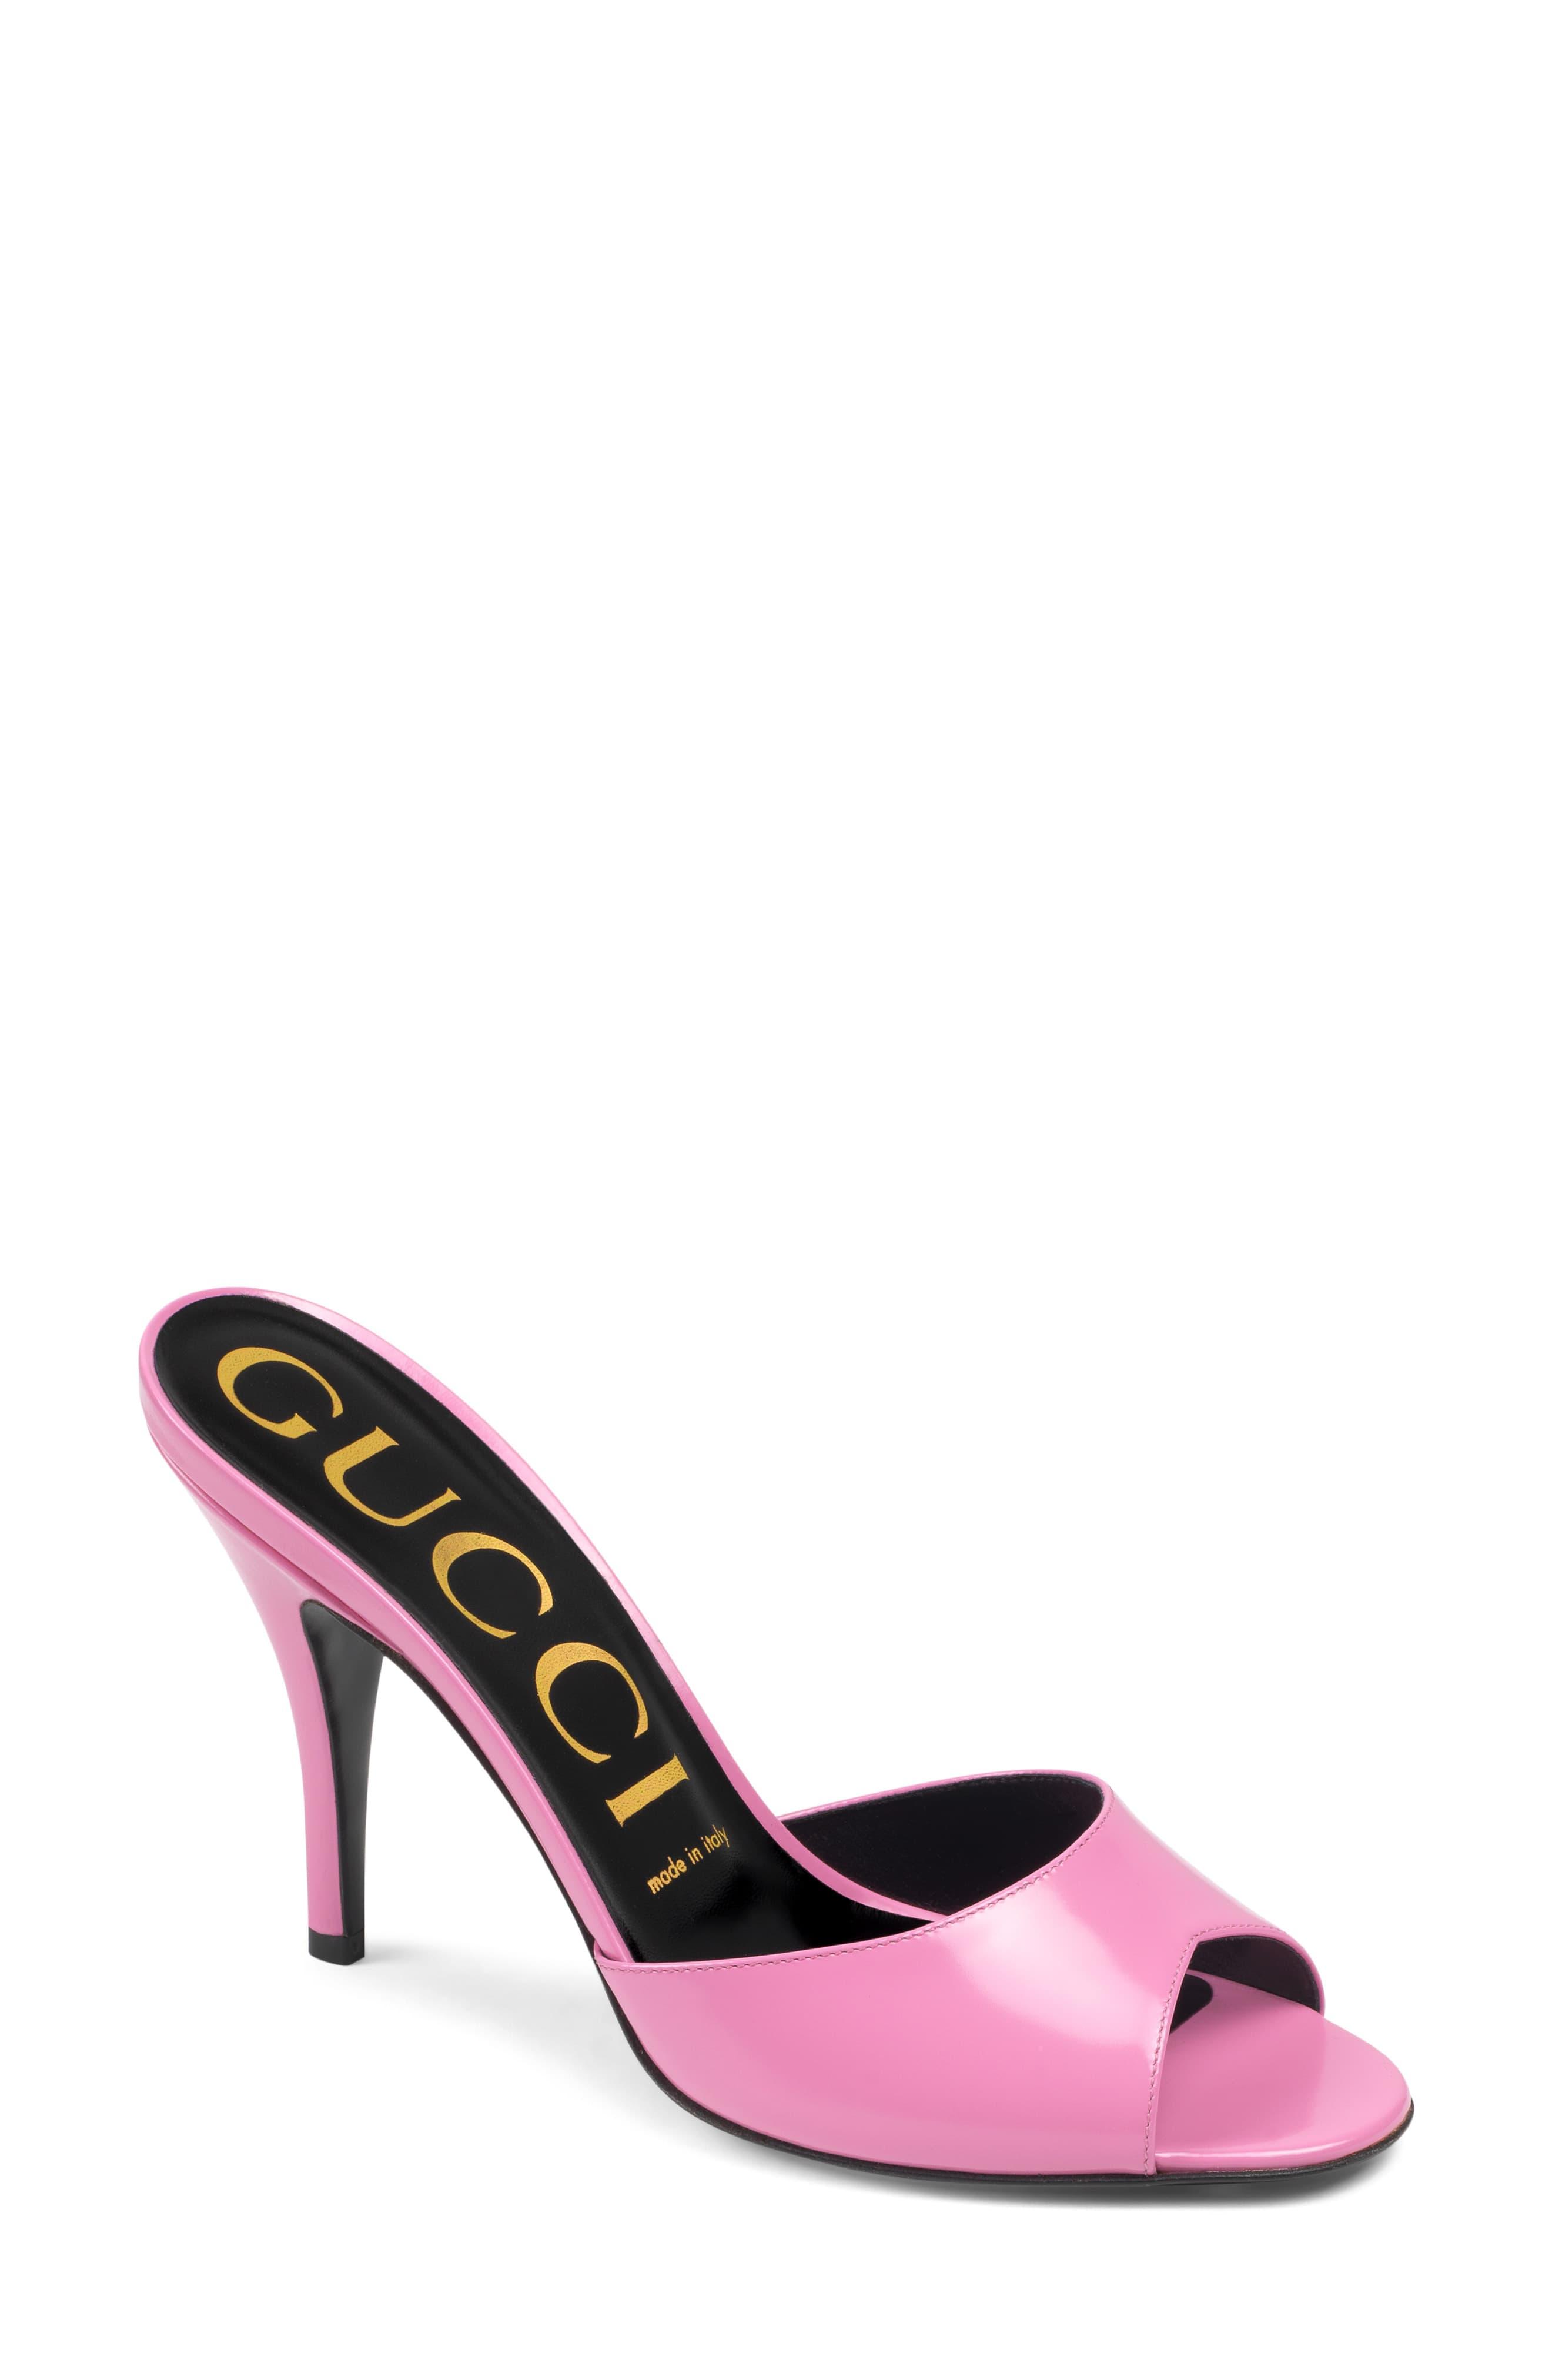 gucci pink bottom heels